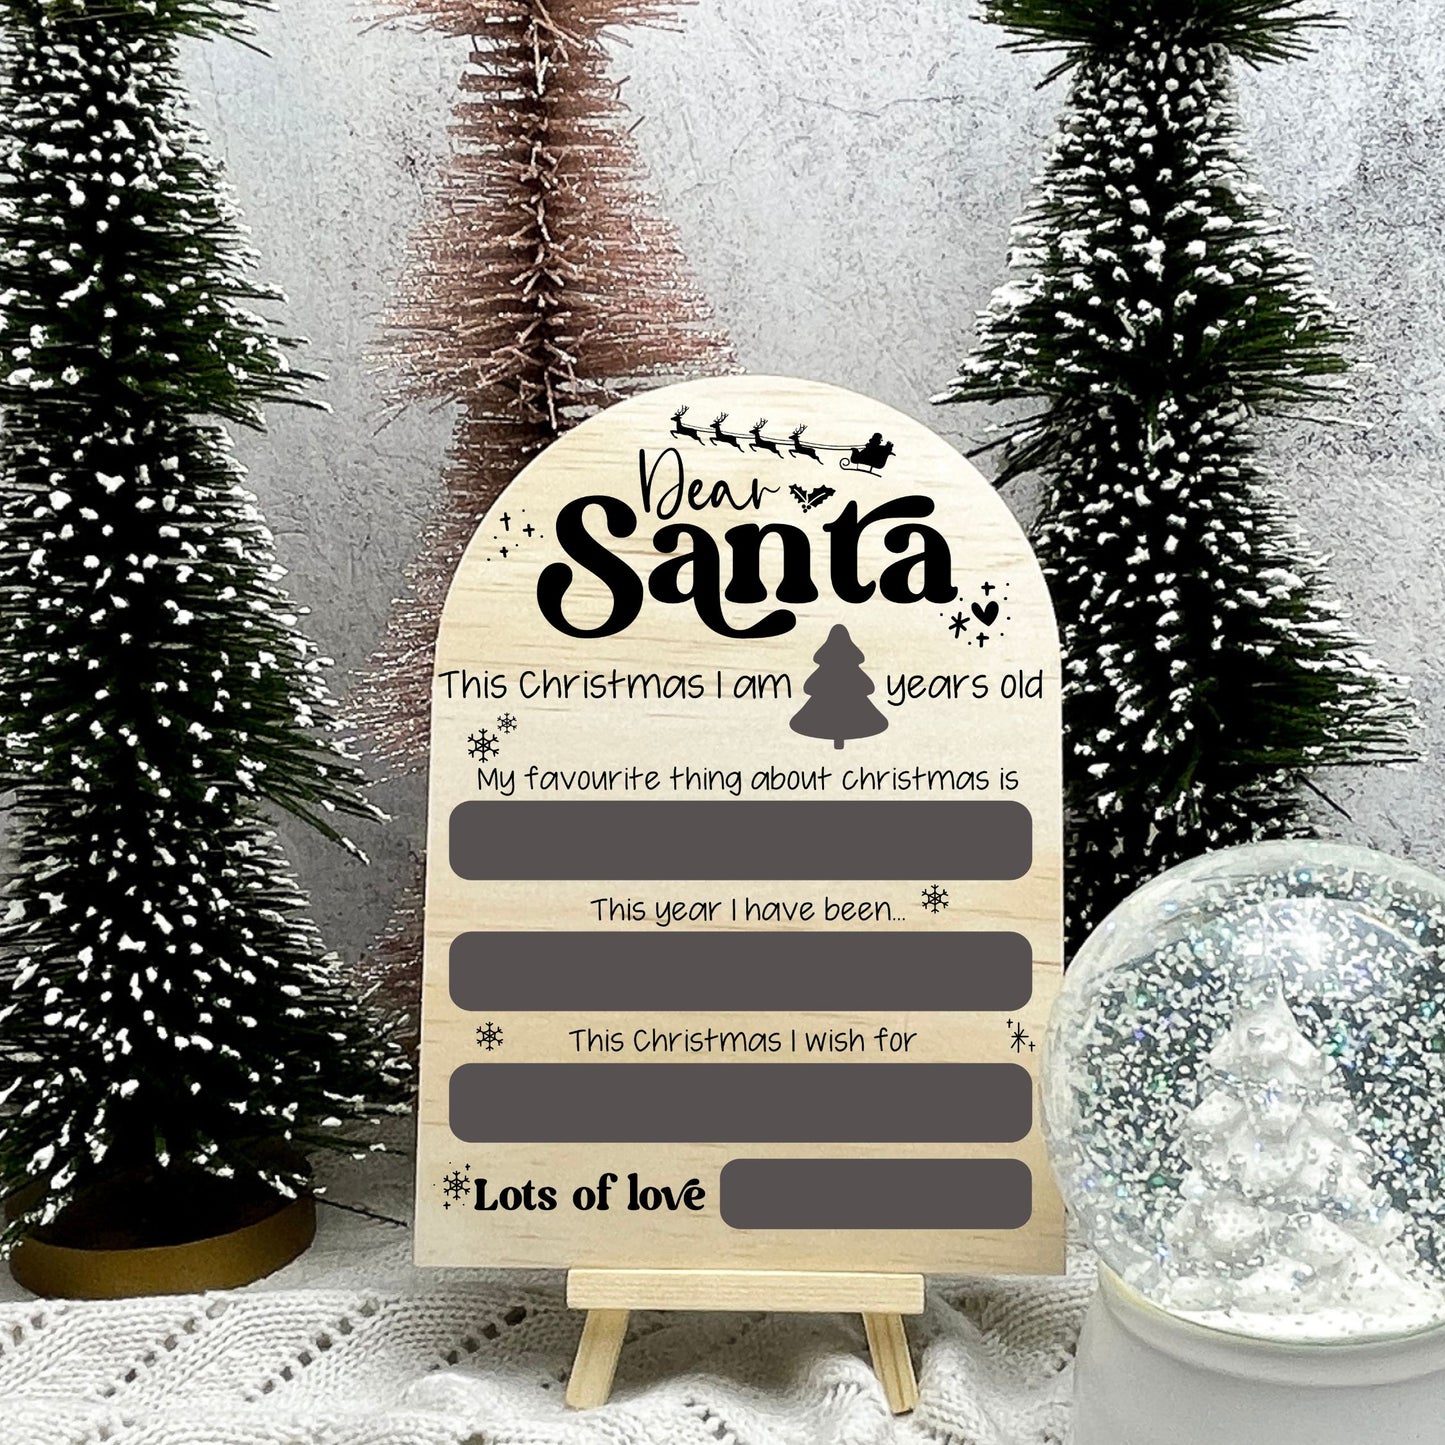 Kids Santa list, Kids Letter to Santa, Santa Claus Letter, Christmas Eve Letter, Christmas wish List